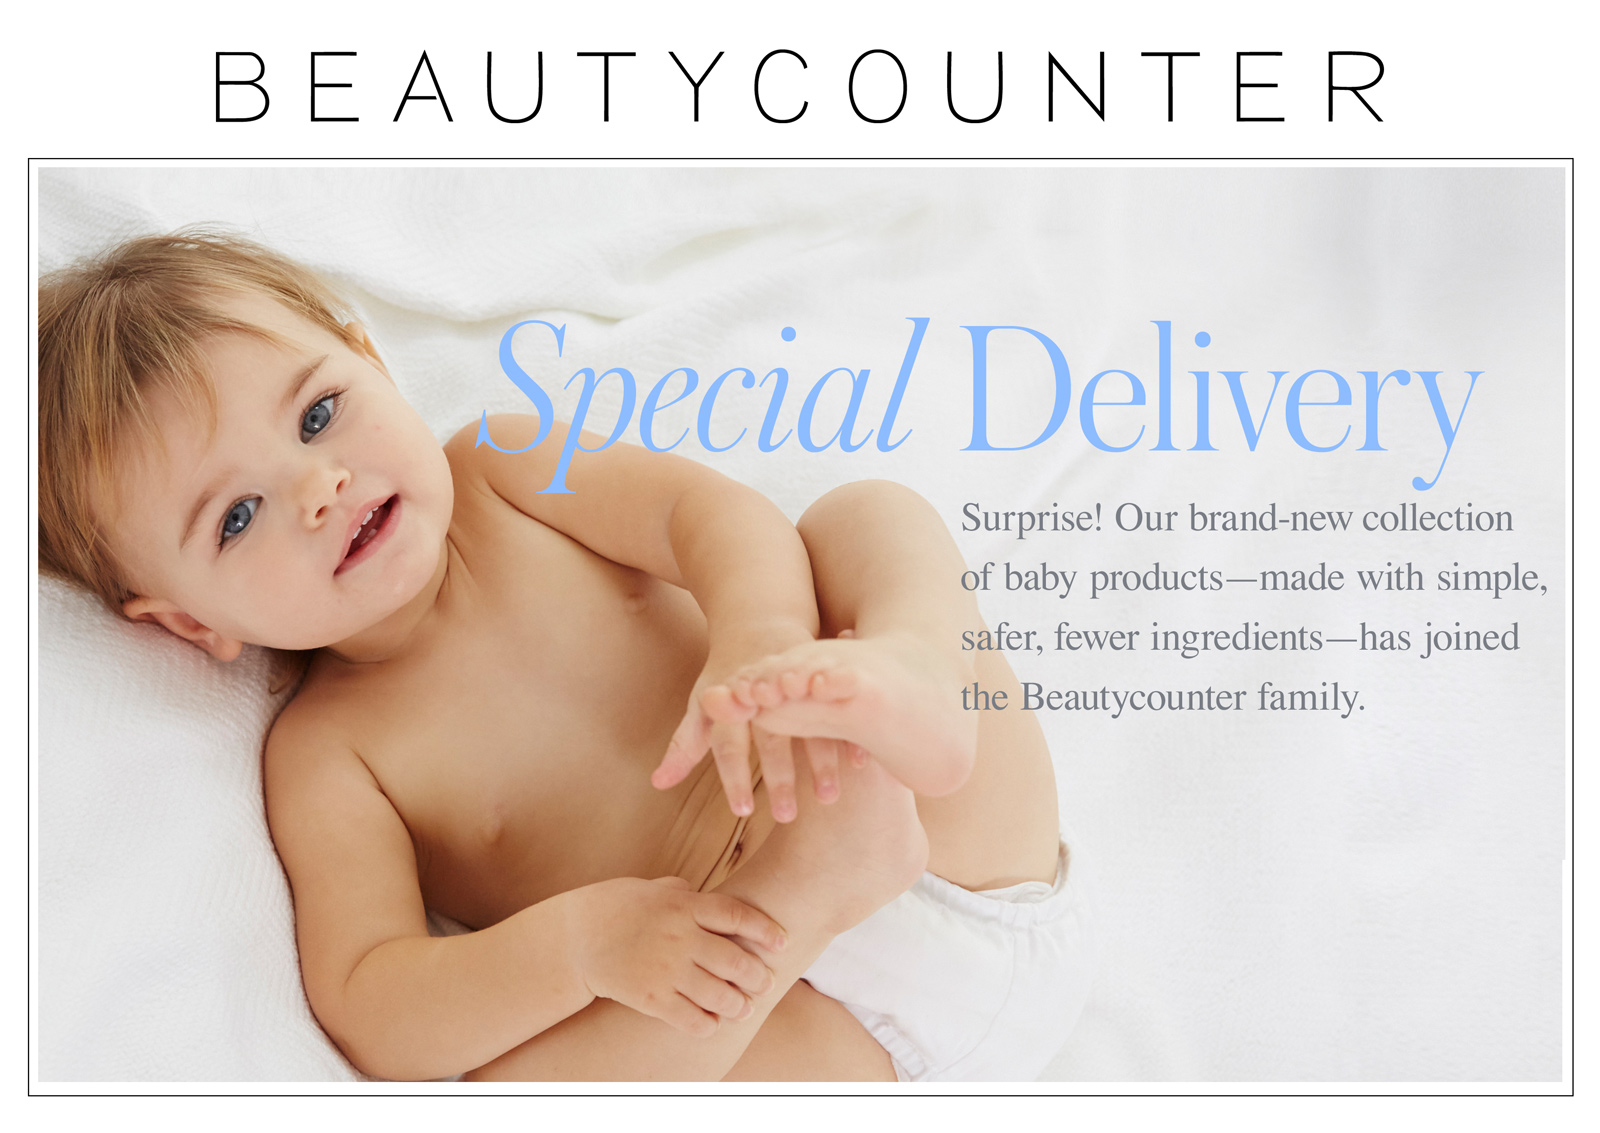 000014-Beautycounter_BabyLaunch-Emailcopy